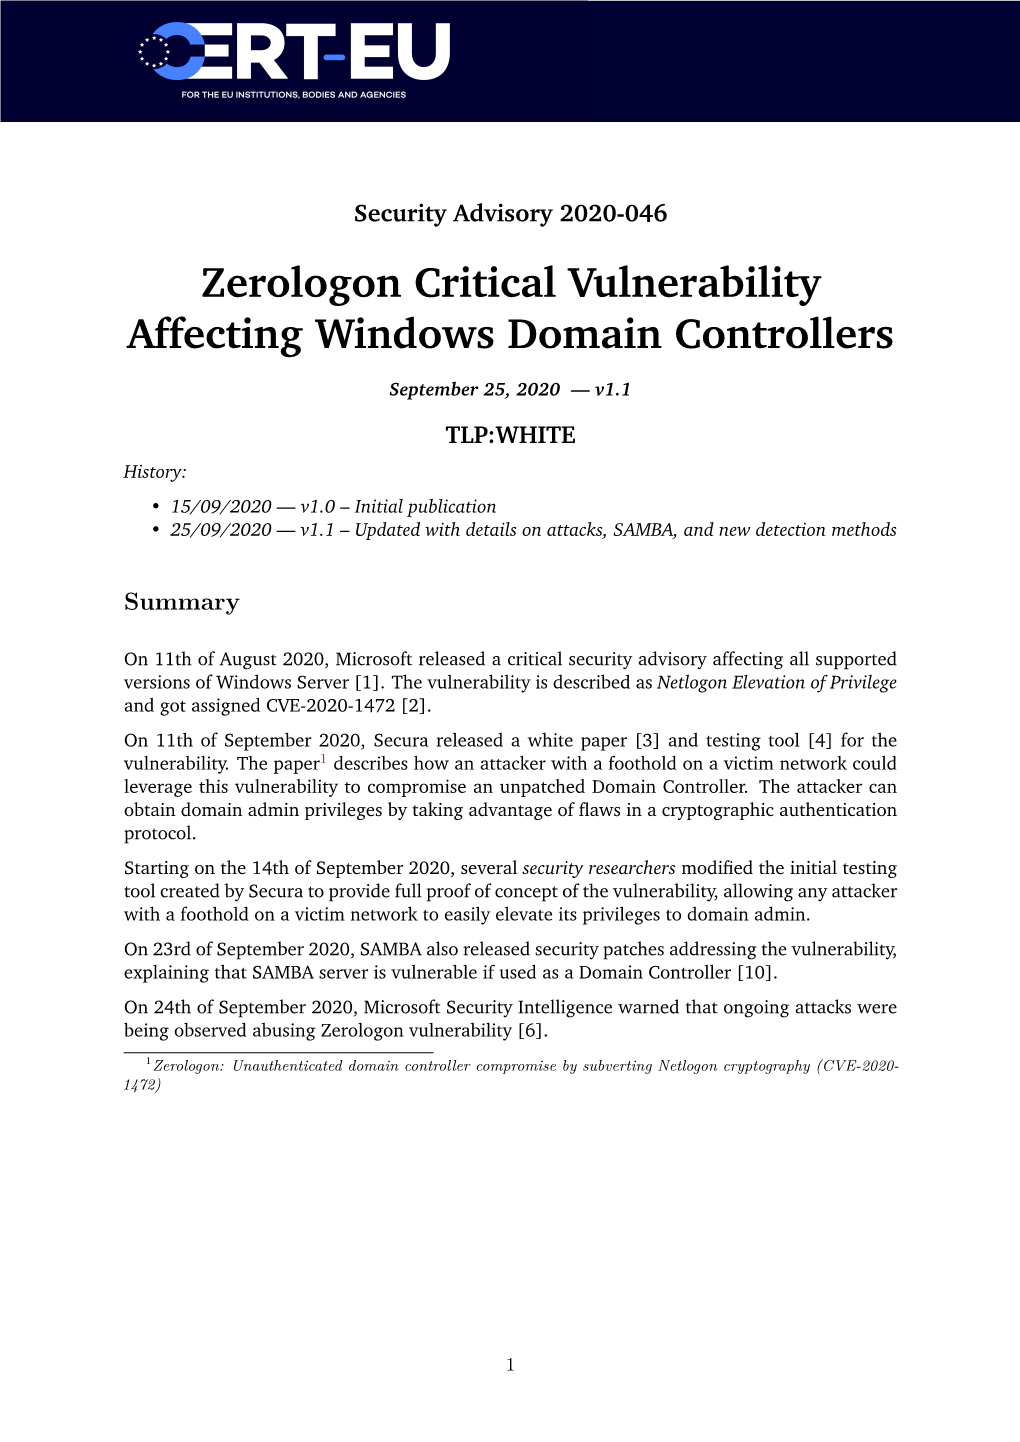 Zerologon Critical Vulnerability Affecting Windows Domain Controllers